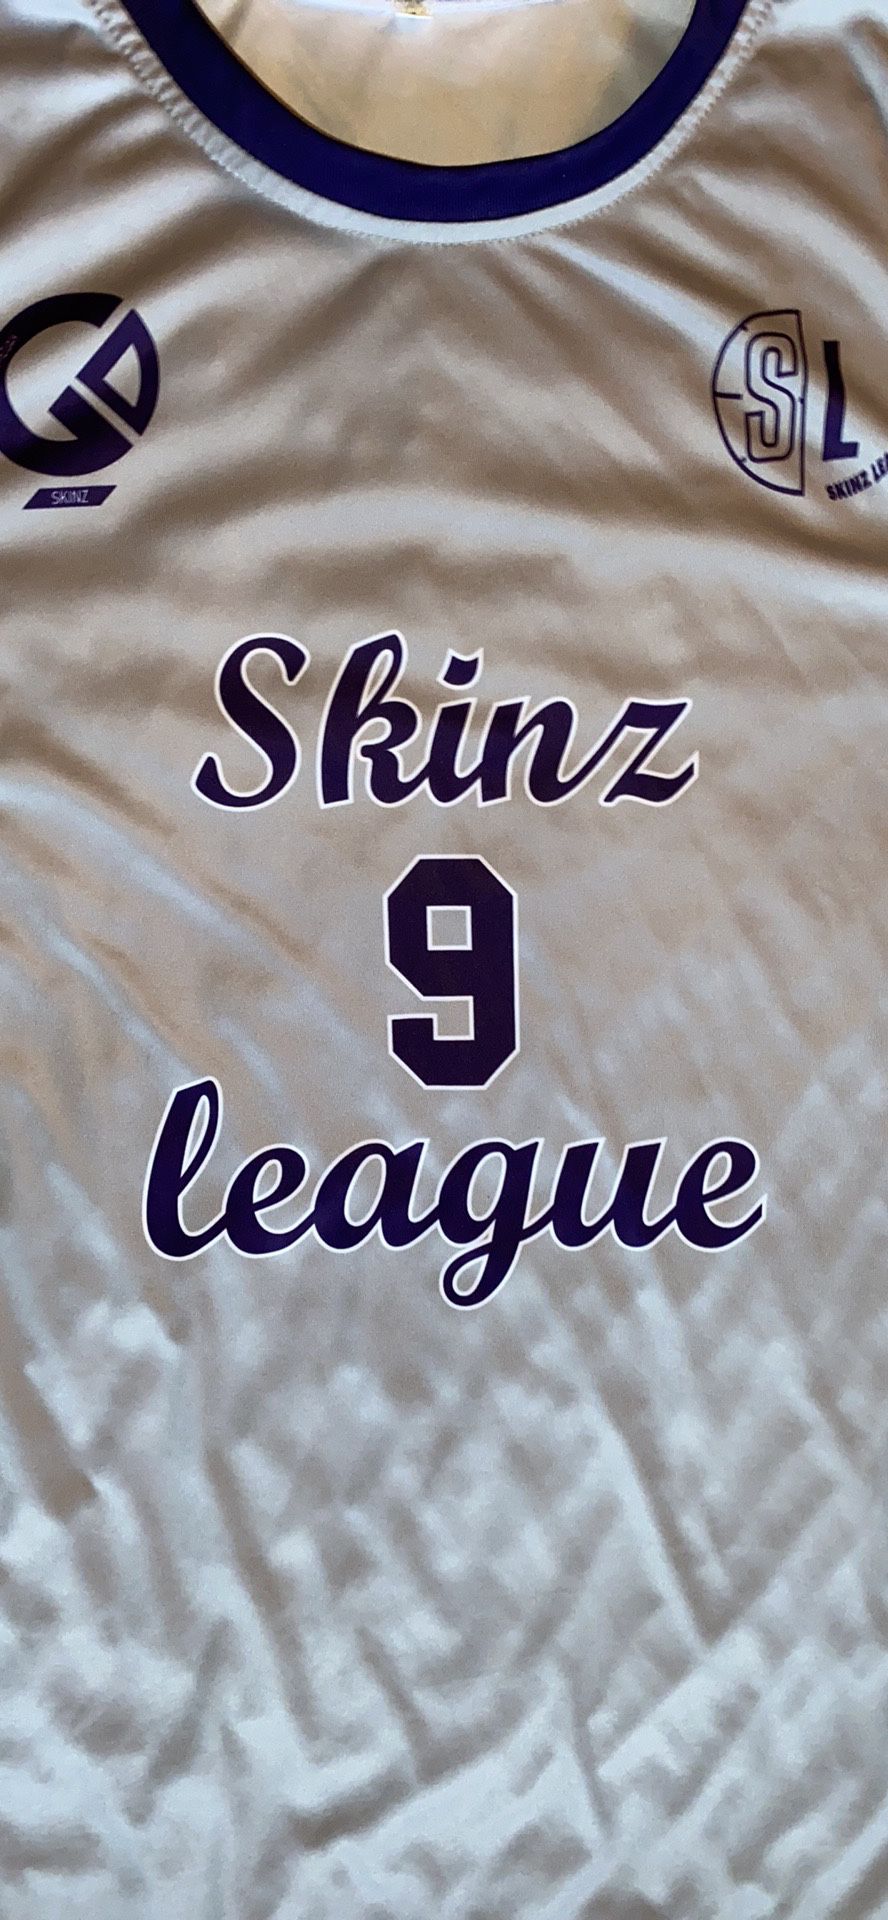 Oklahoma City Okc Skinz League Pro Am Basketball League Jersey